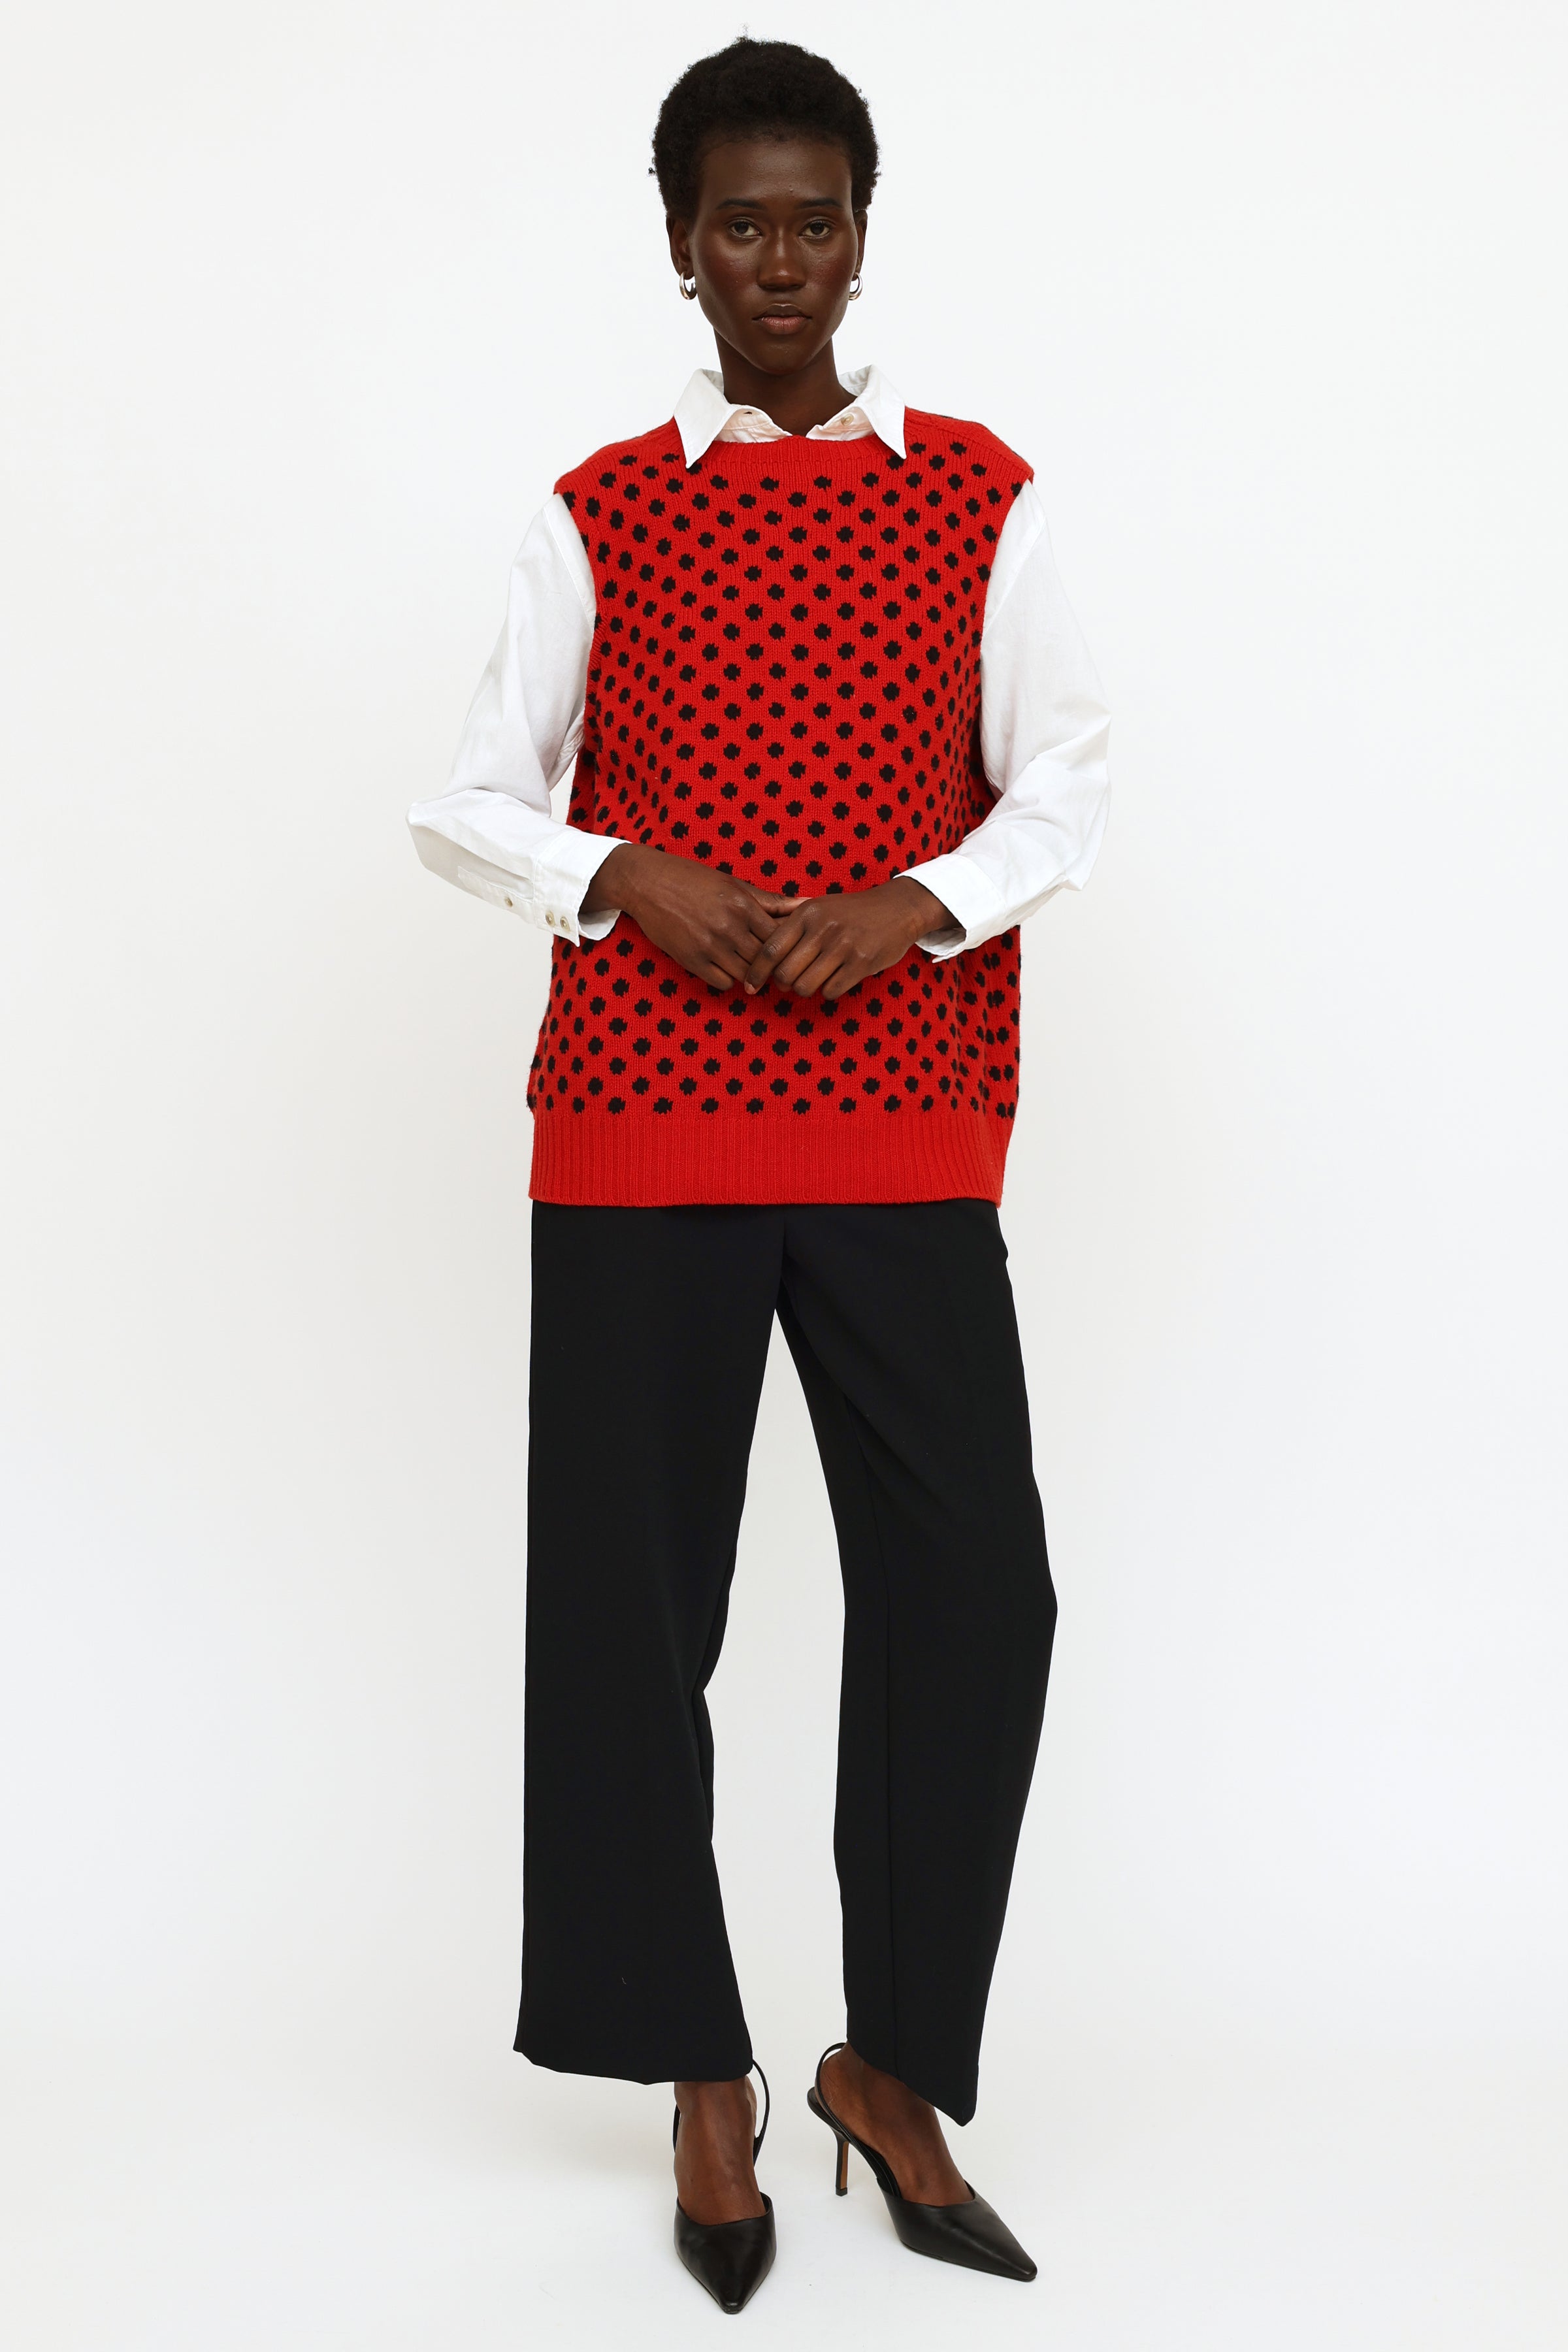 Prada   By color knit vest   13ss